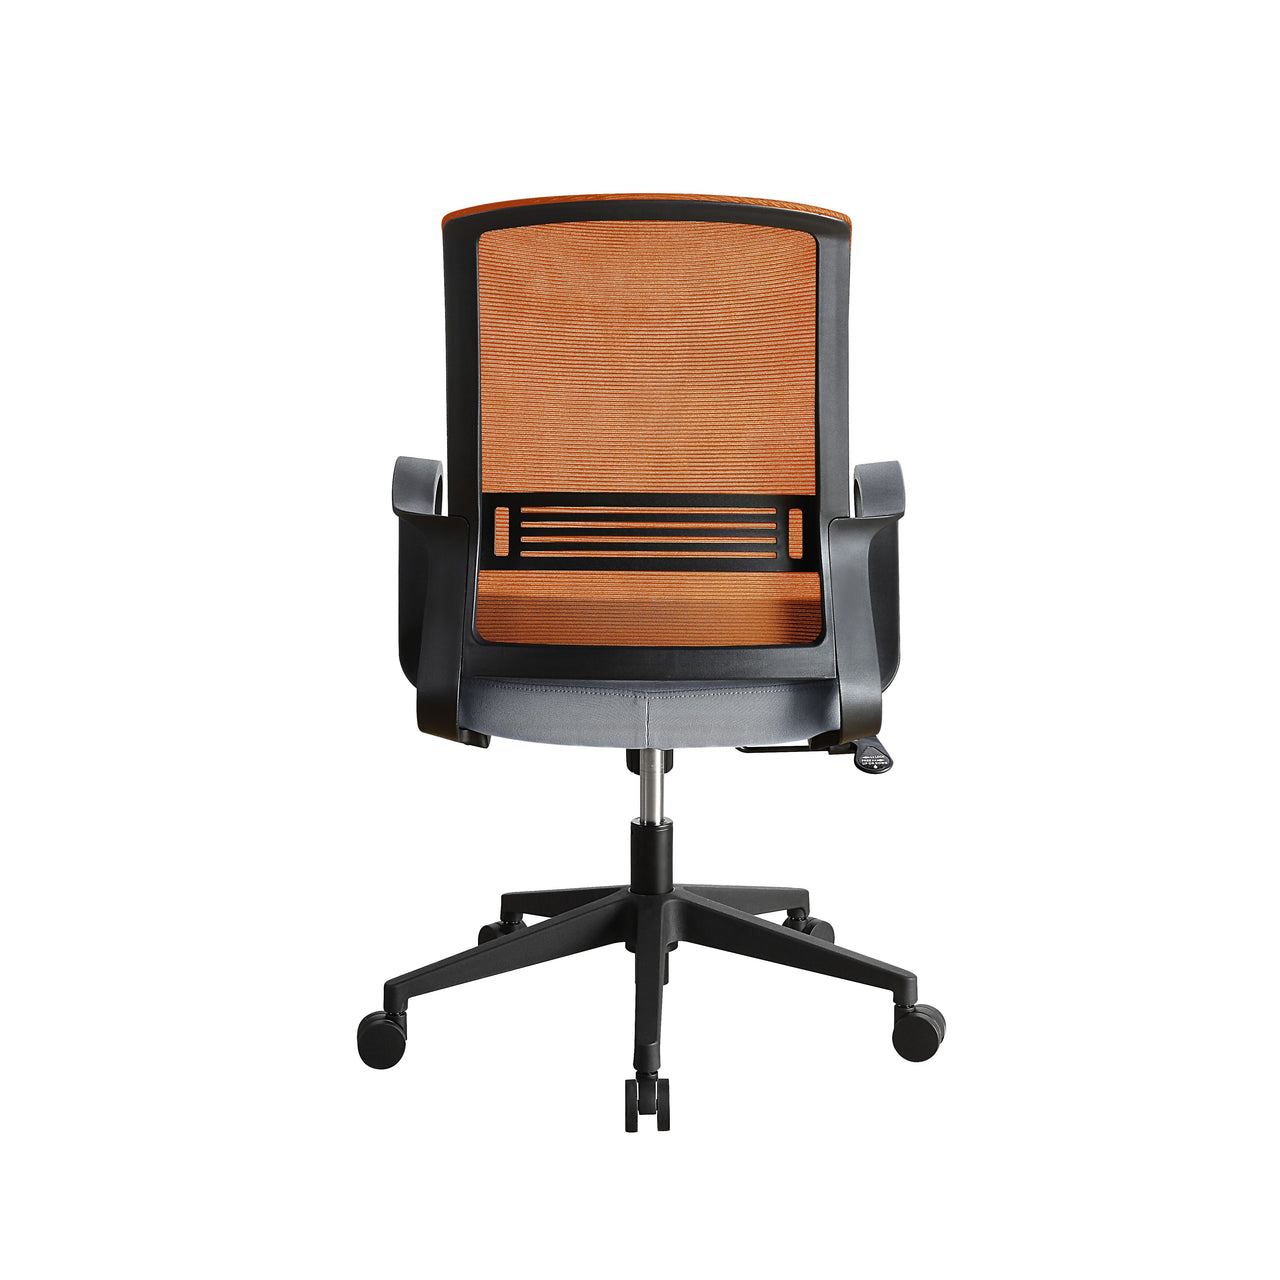 Tanko - Office Chair - Tony's Home Furnishings